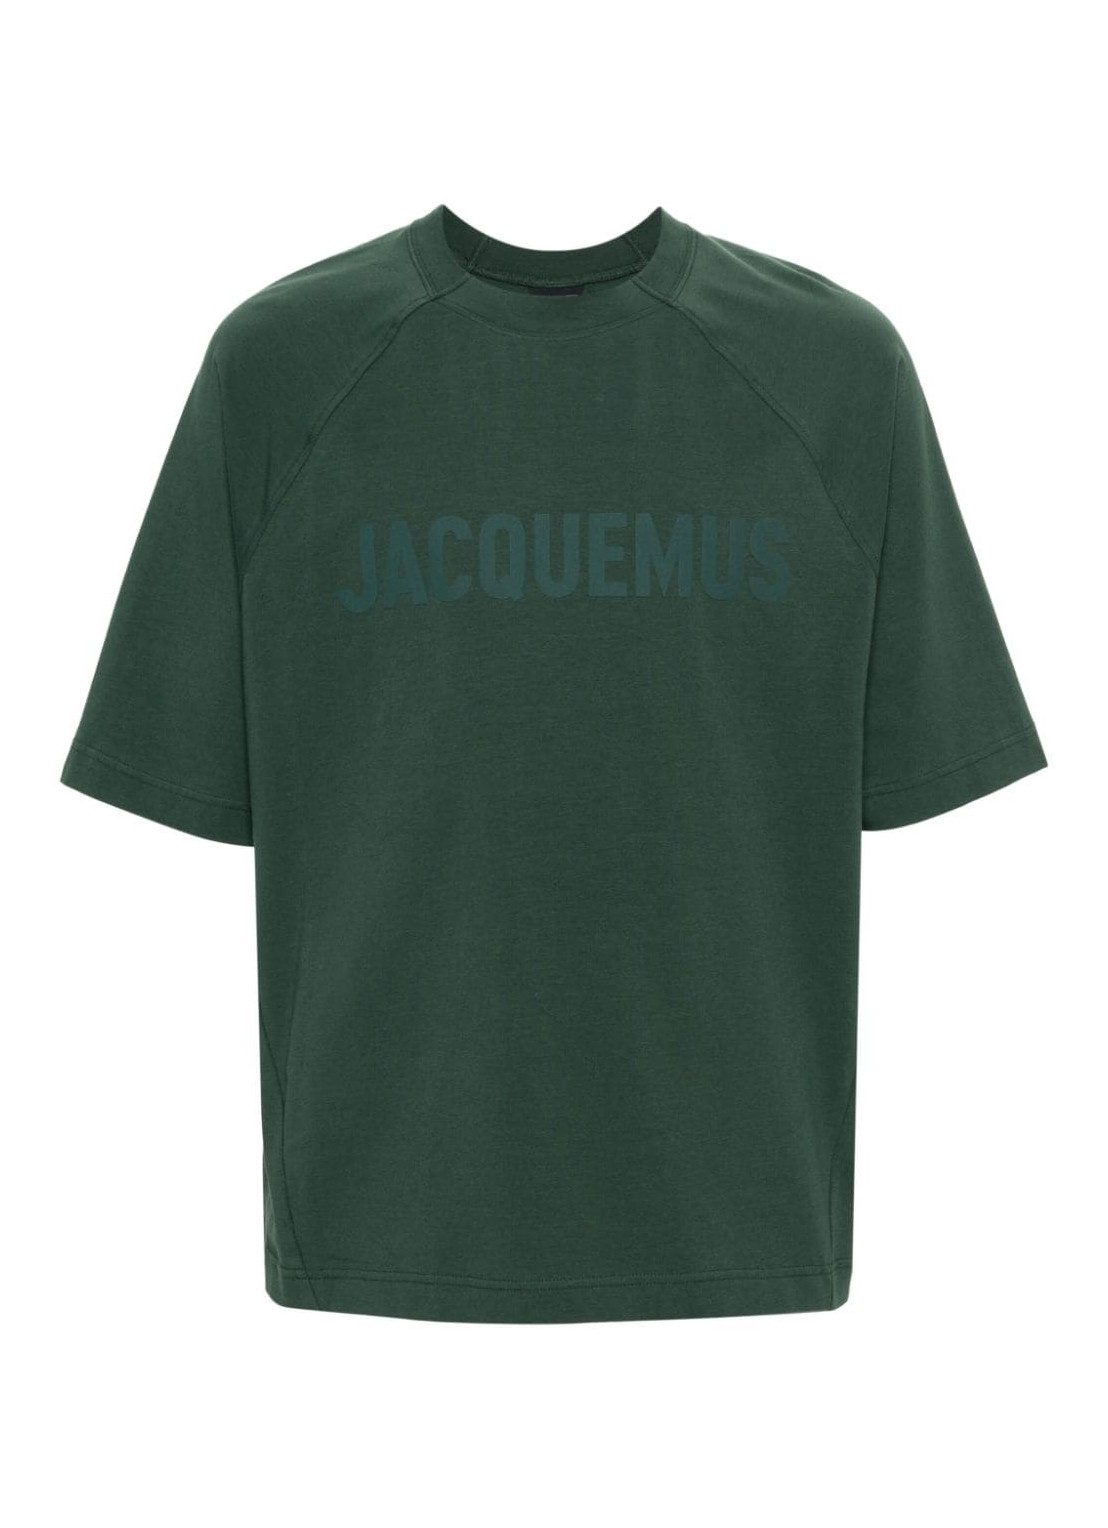 Camiseta jacquemus t-shirt man le tshirt typo 24e245js2122031 590 talla S
 